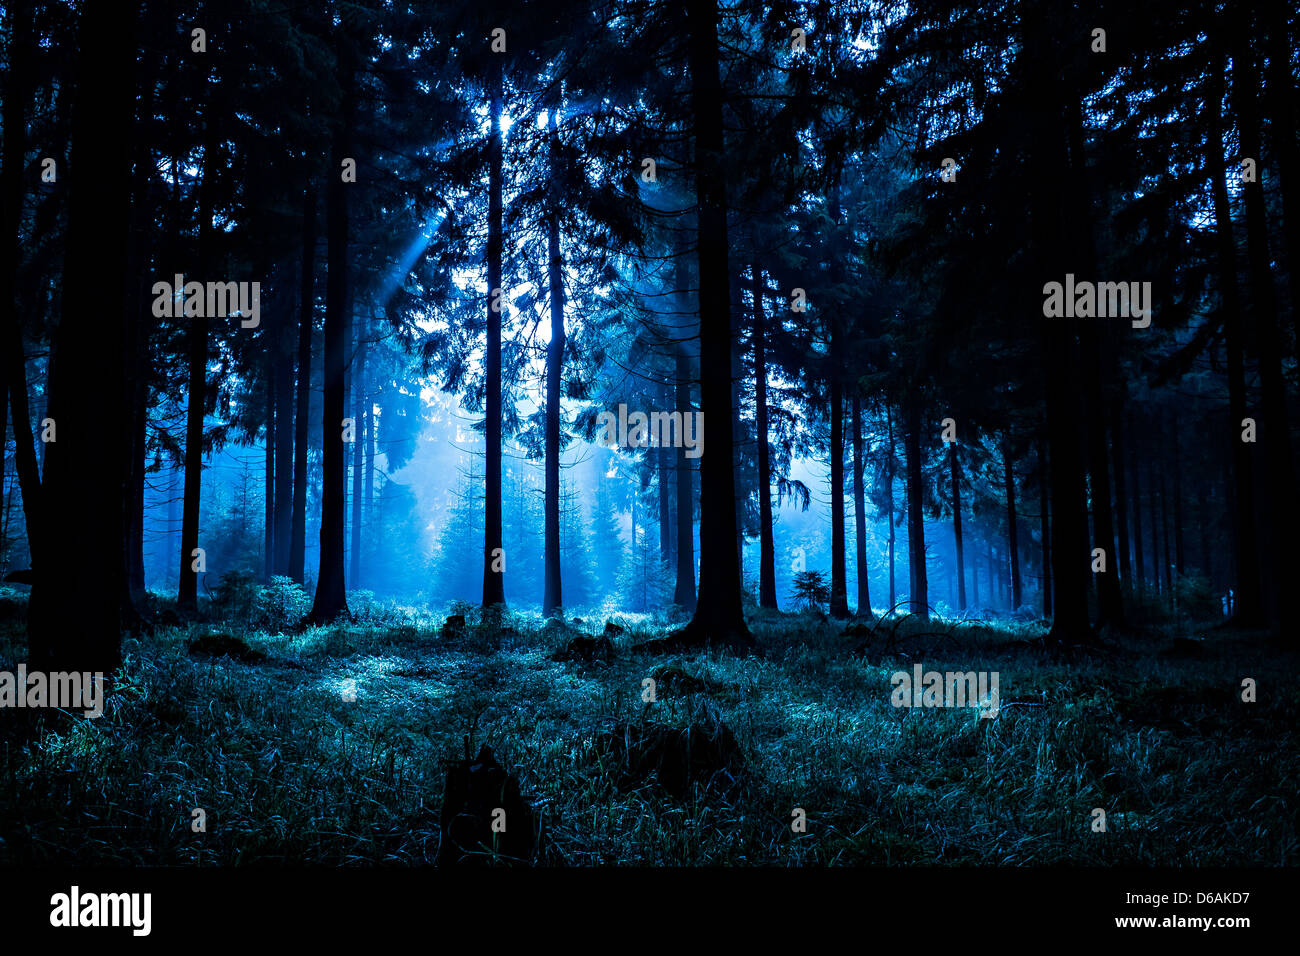 night-forest-D6AKD7.jpg